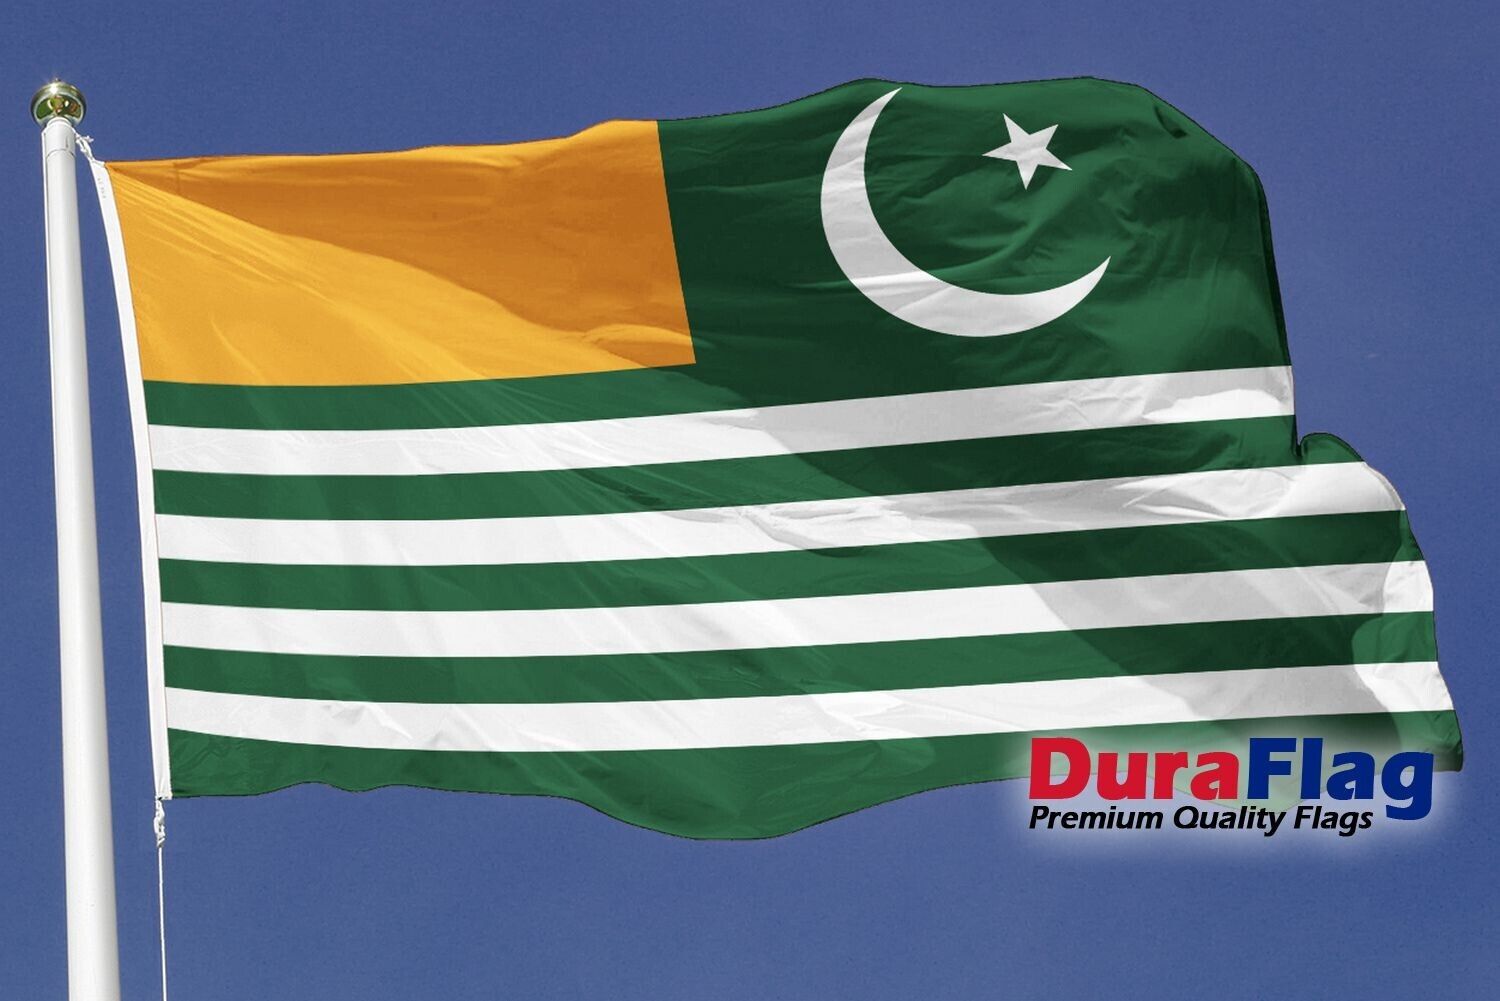 Kashmir Duraflag Premium Quality (20x12inch) Flag